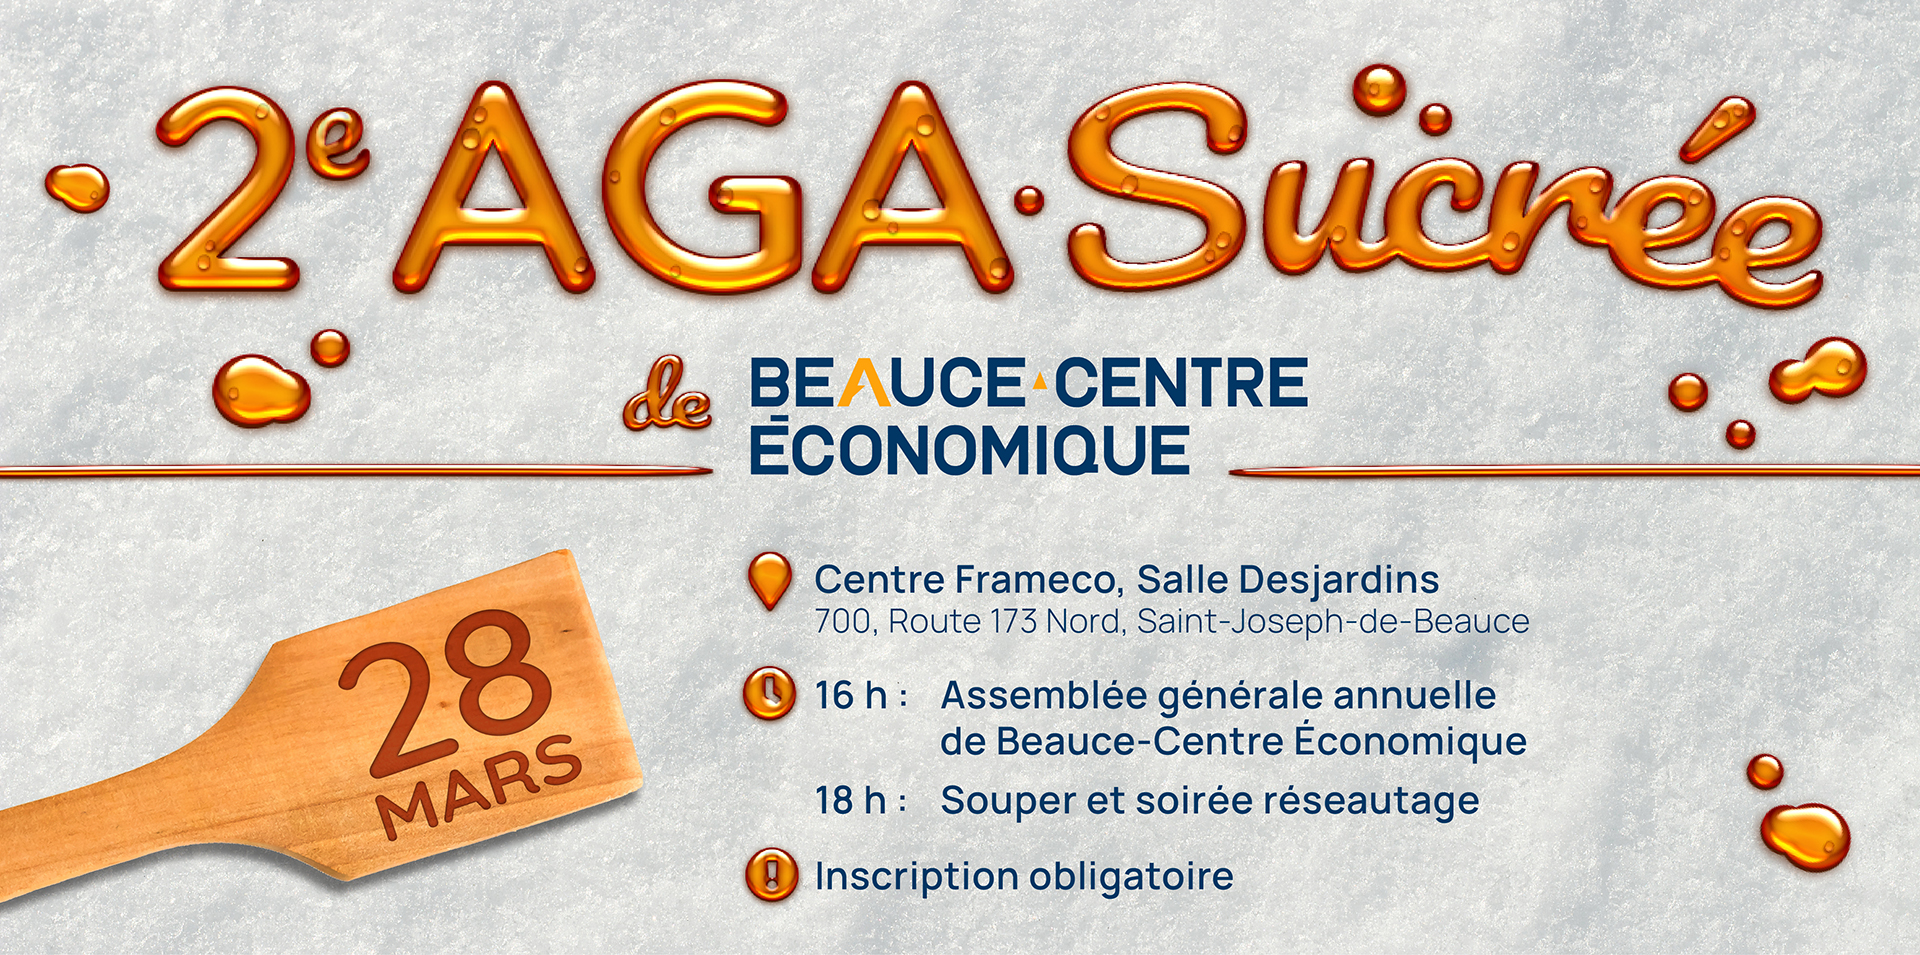 2e AGA sucrée de Beauce-Centre Économique